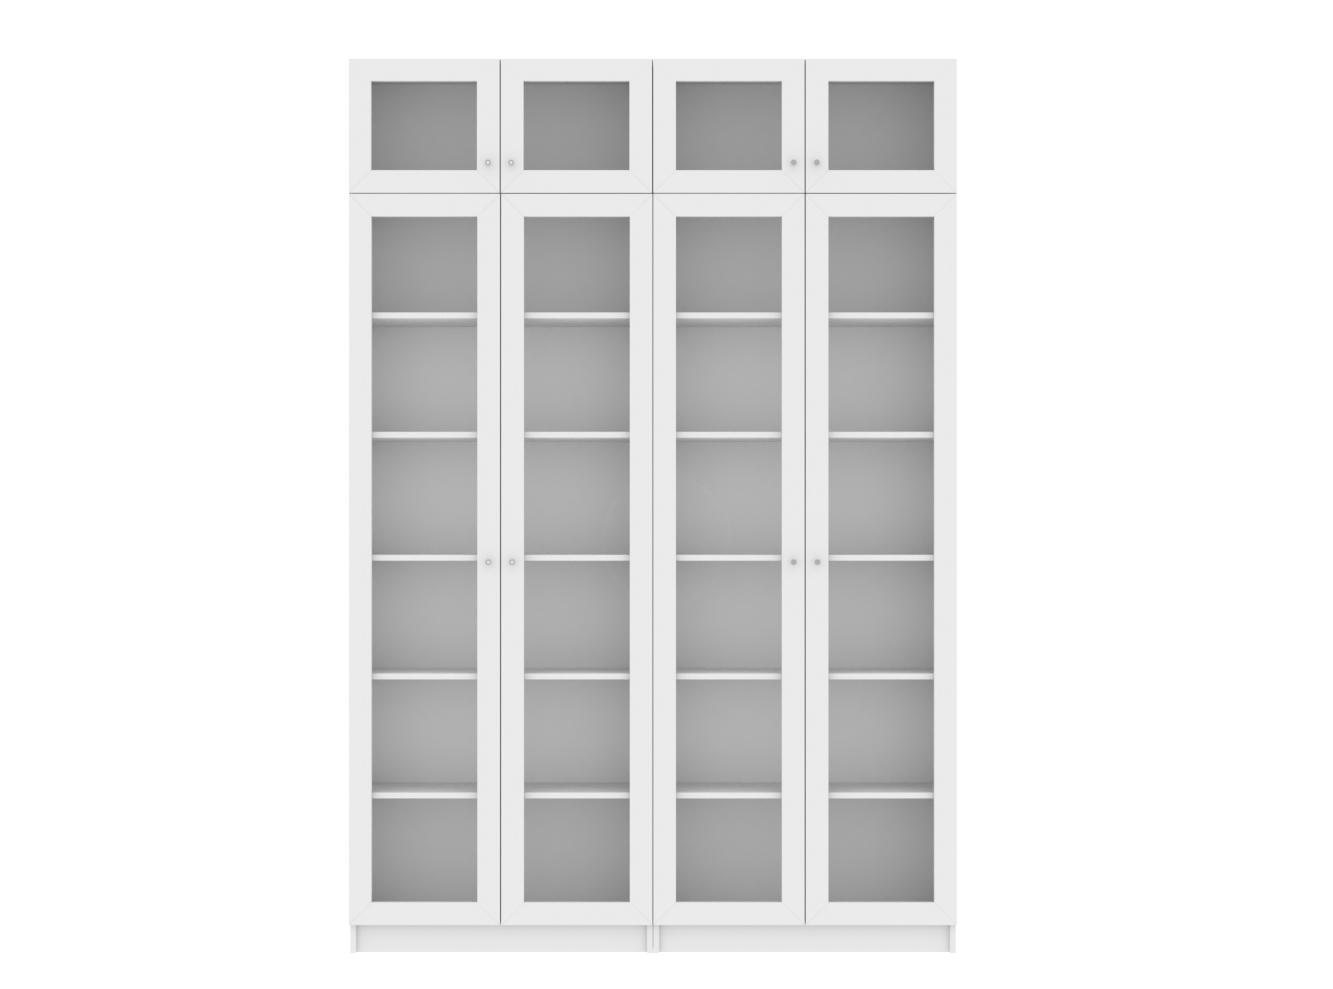  Книжный шкаф Билли 395 white ИКЕА (IKEA) изображение товара